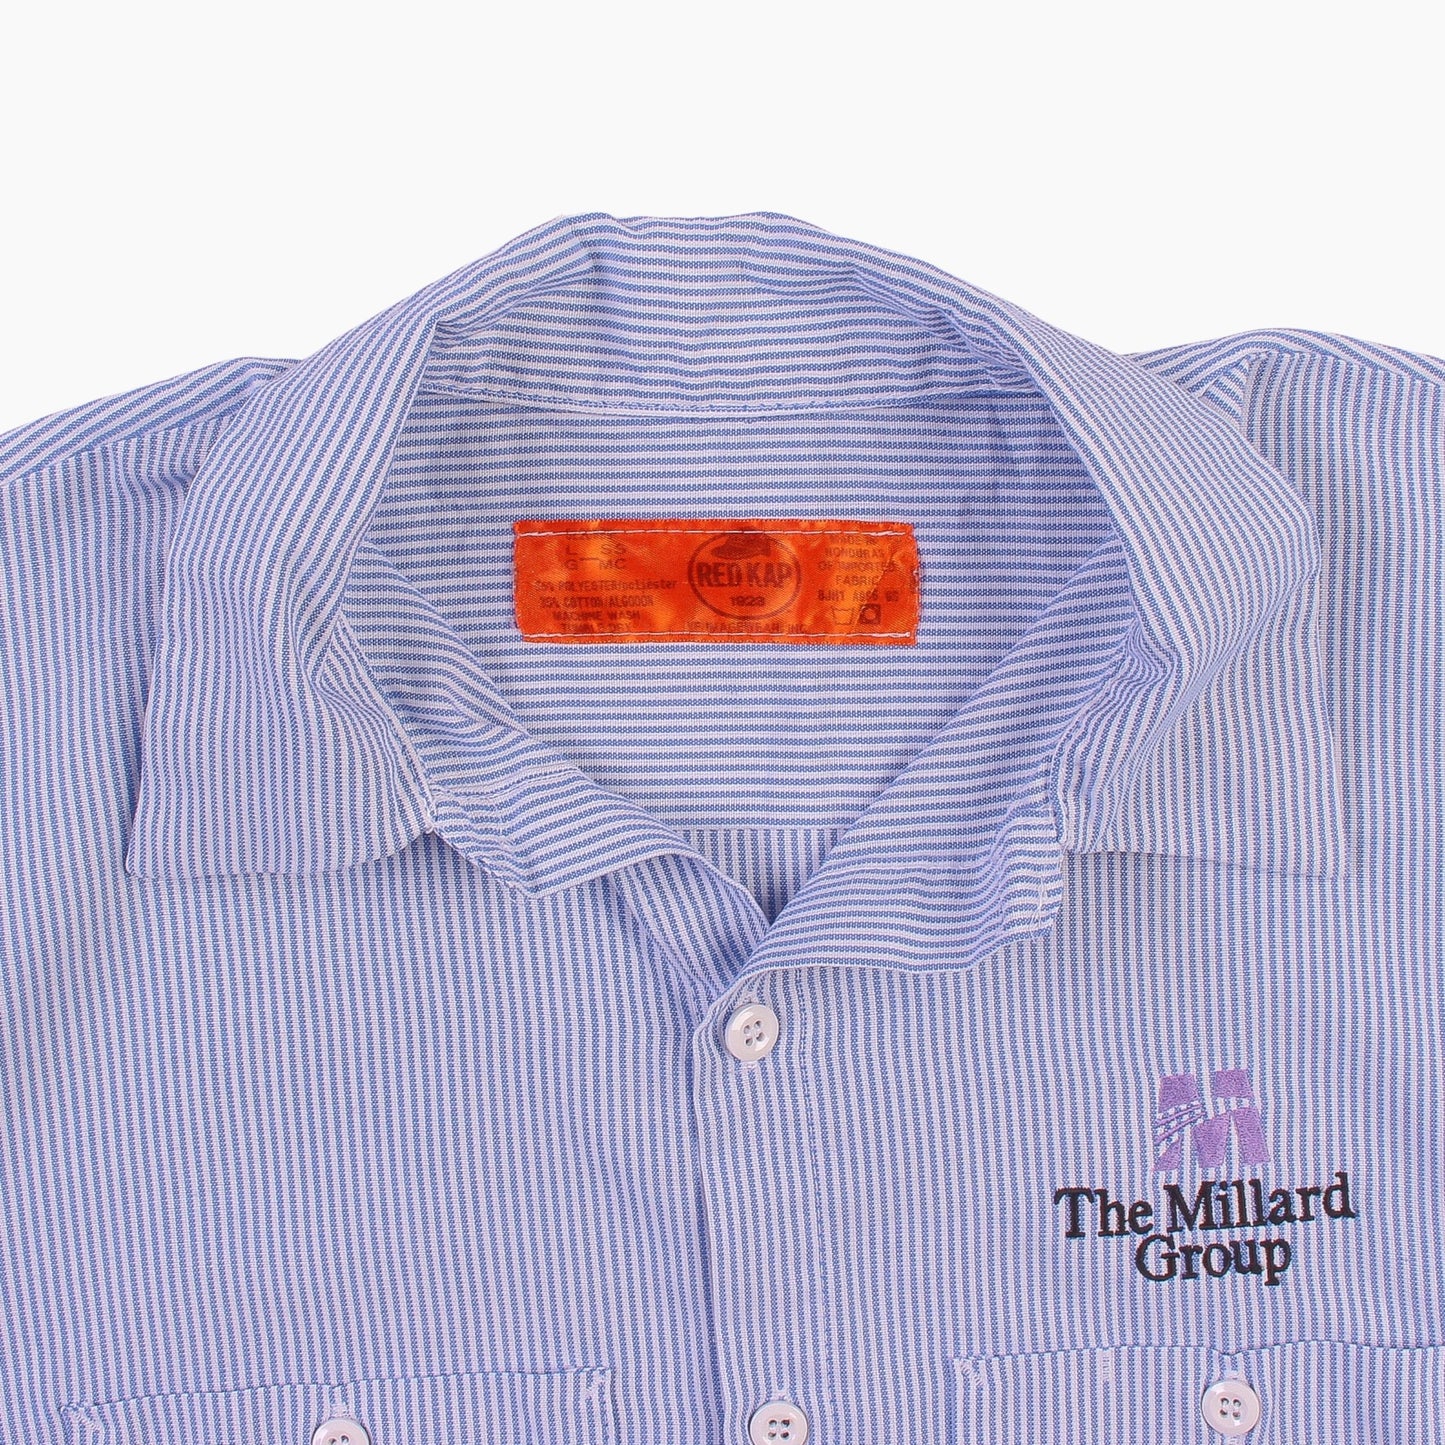 'The Millard Group' Garage Work Shirt - American Madness